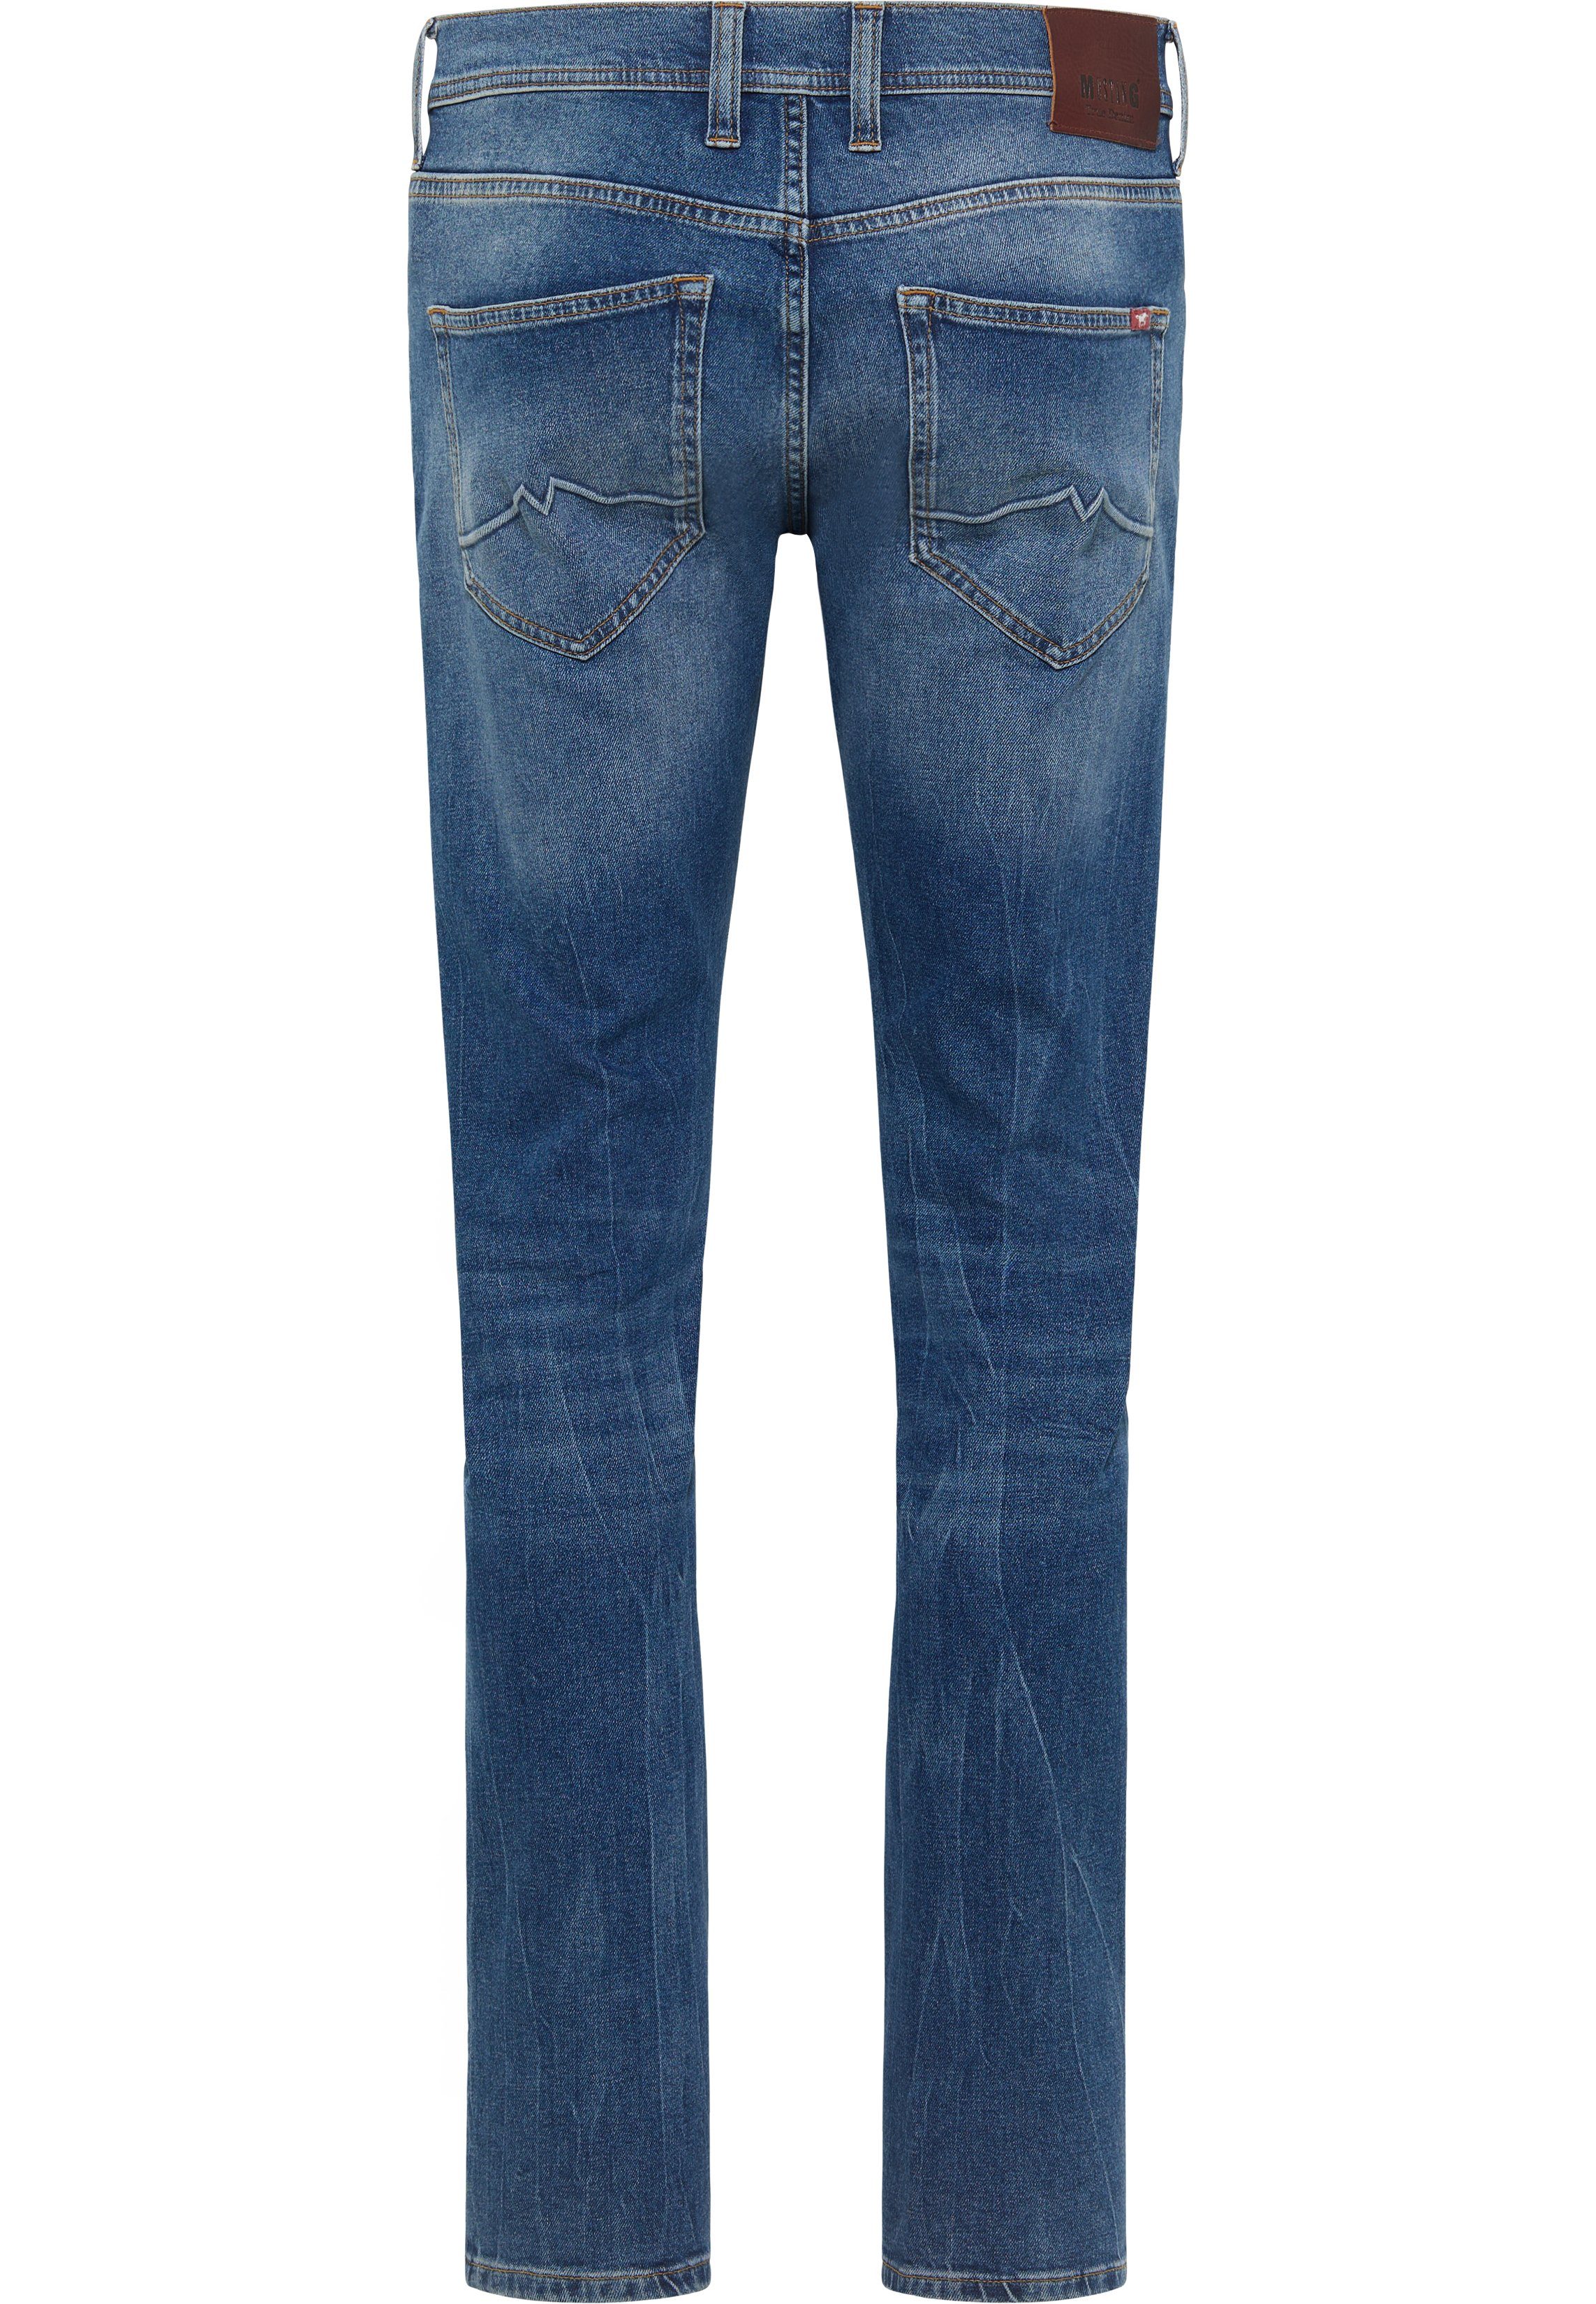 MUSTANG 5-Pocket-Jeans Oregon used medium blue Tapered